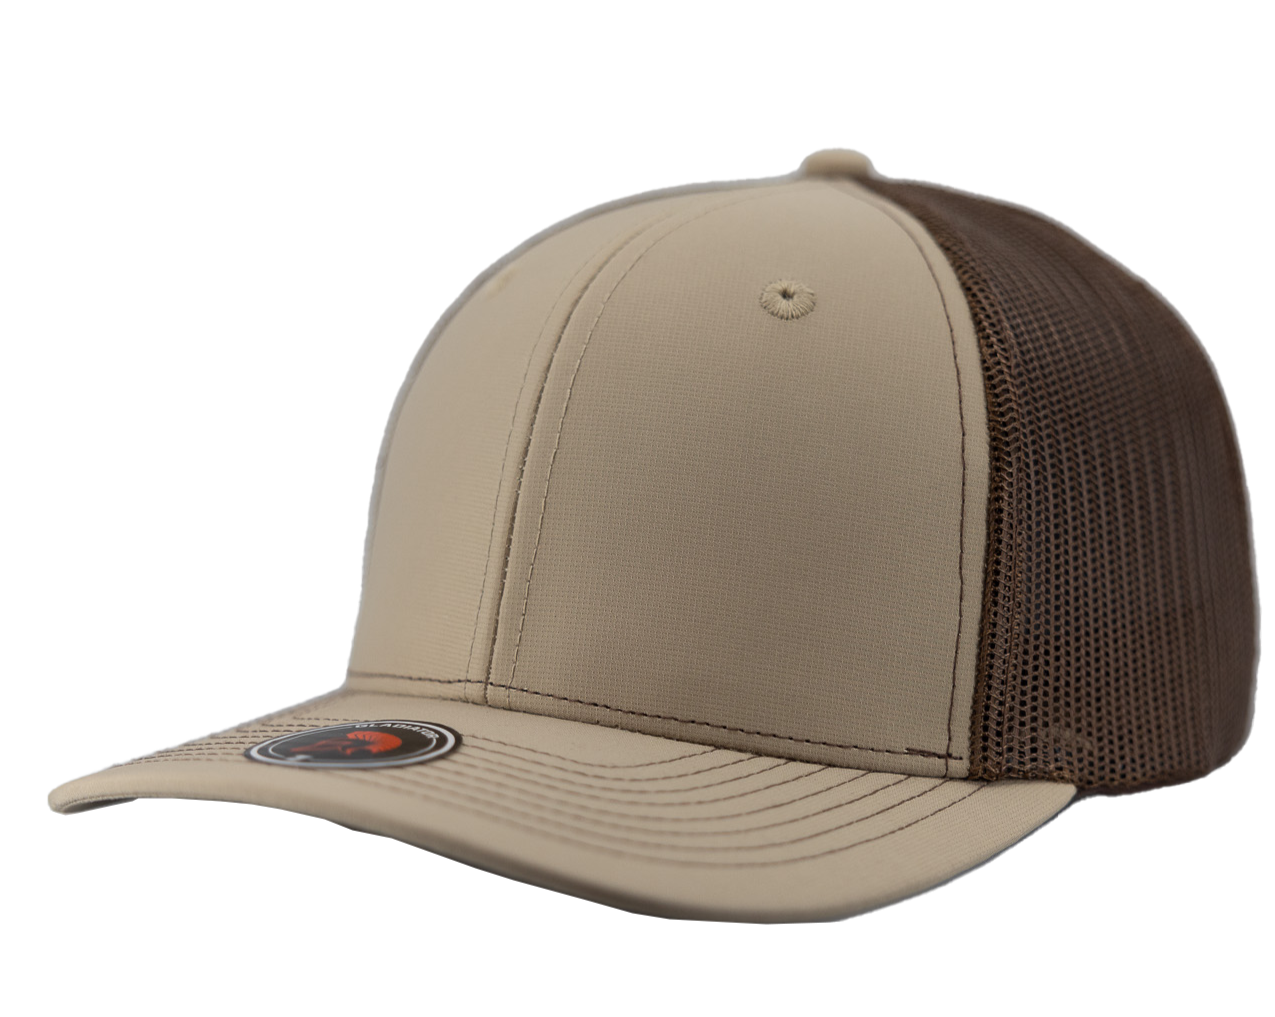 Gladiator- Custom Hat Water Repellent hat-Zapped Headwear-Snapback-Custom hat-Zapped Headwear-khaki-brown